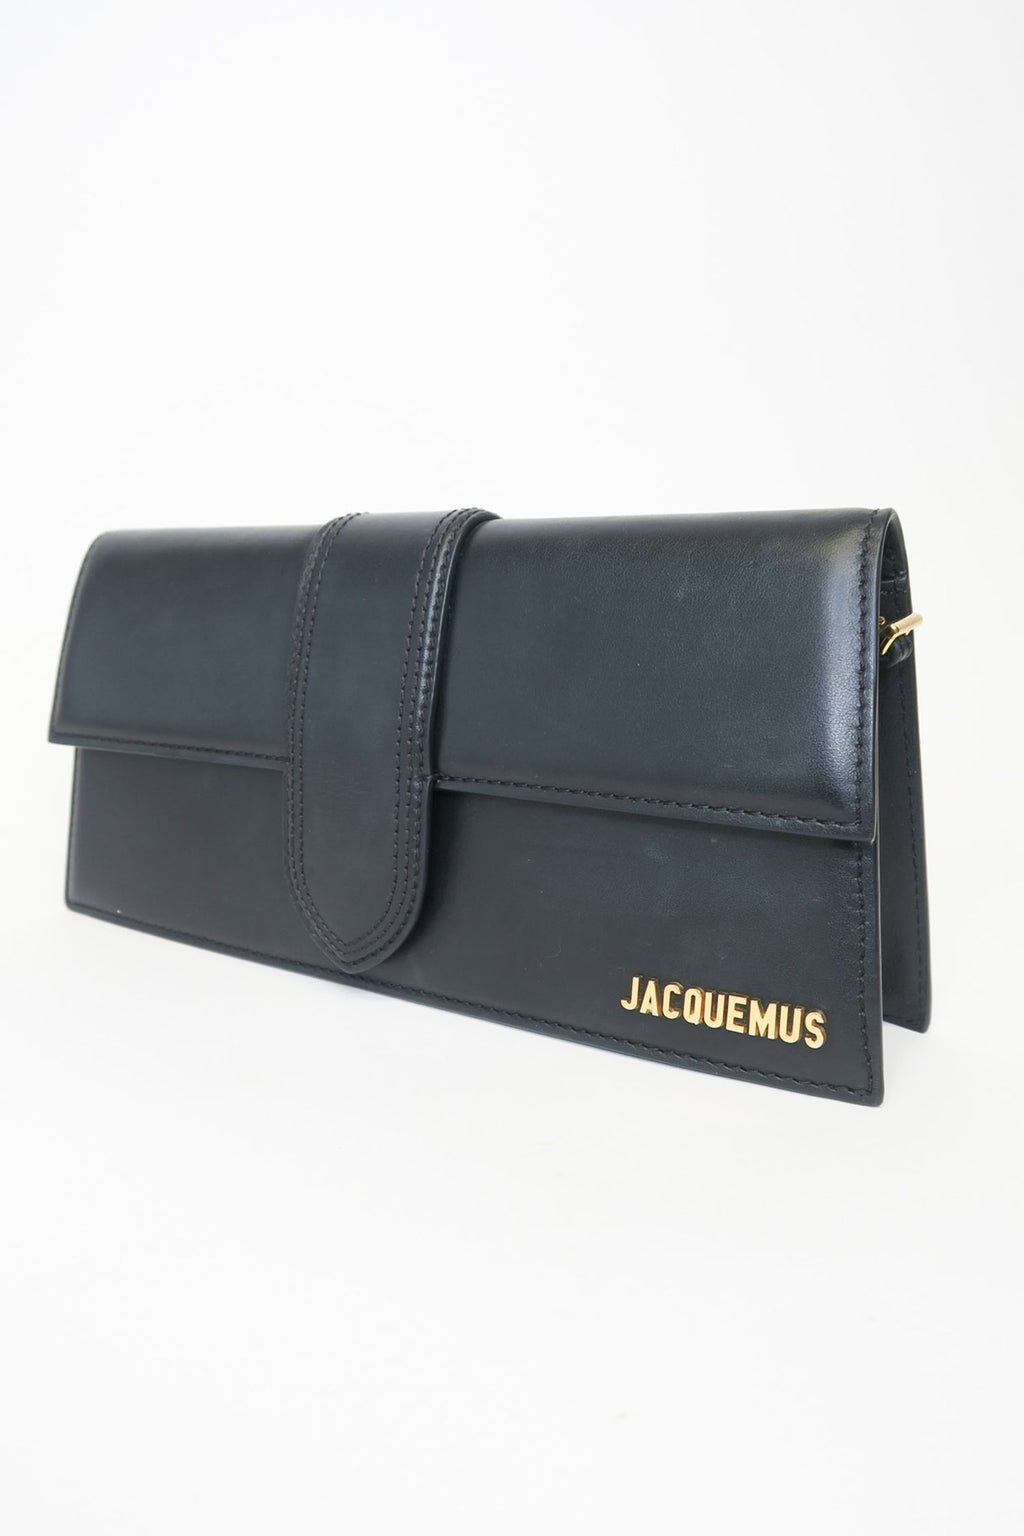 Jacquemus Le Bambino Long Shoulder Bag